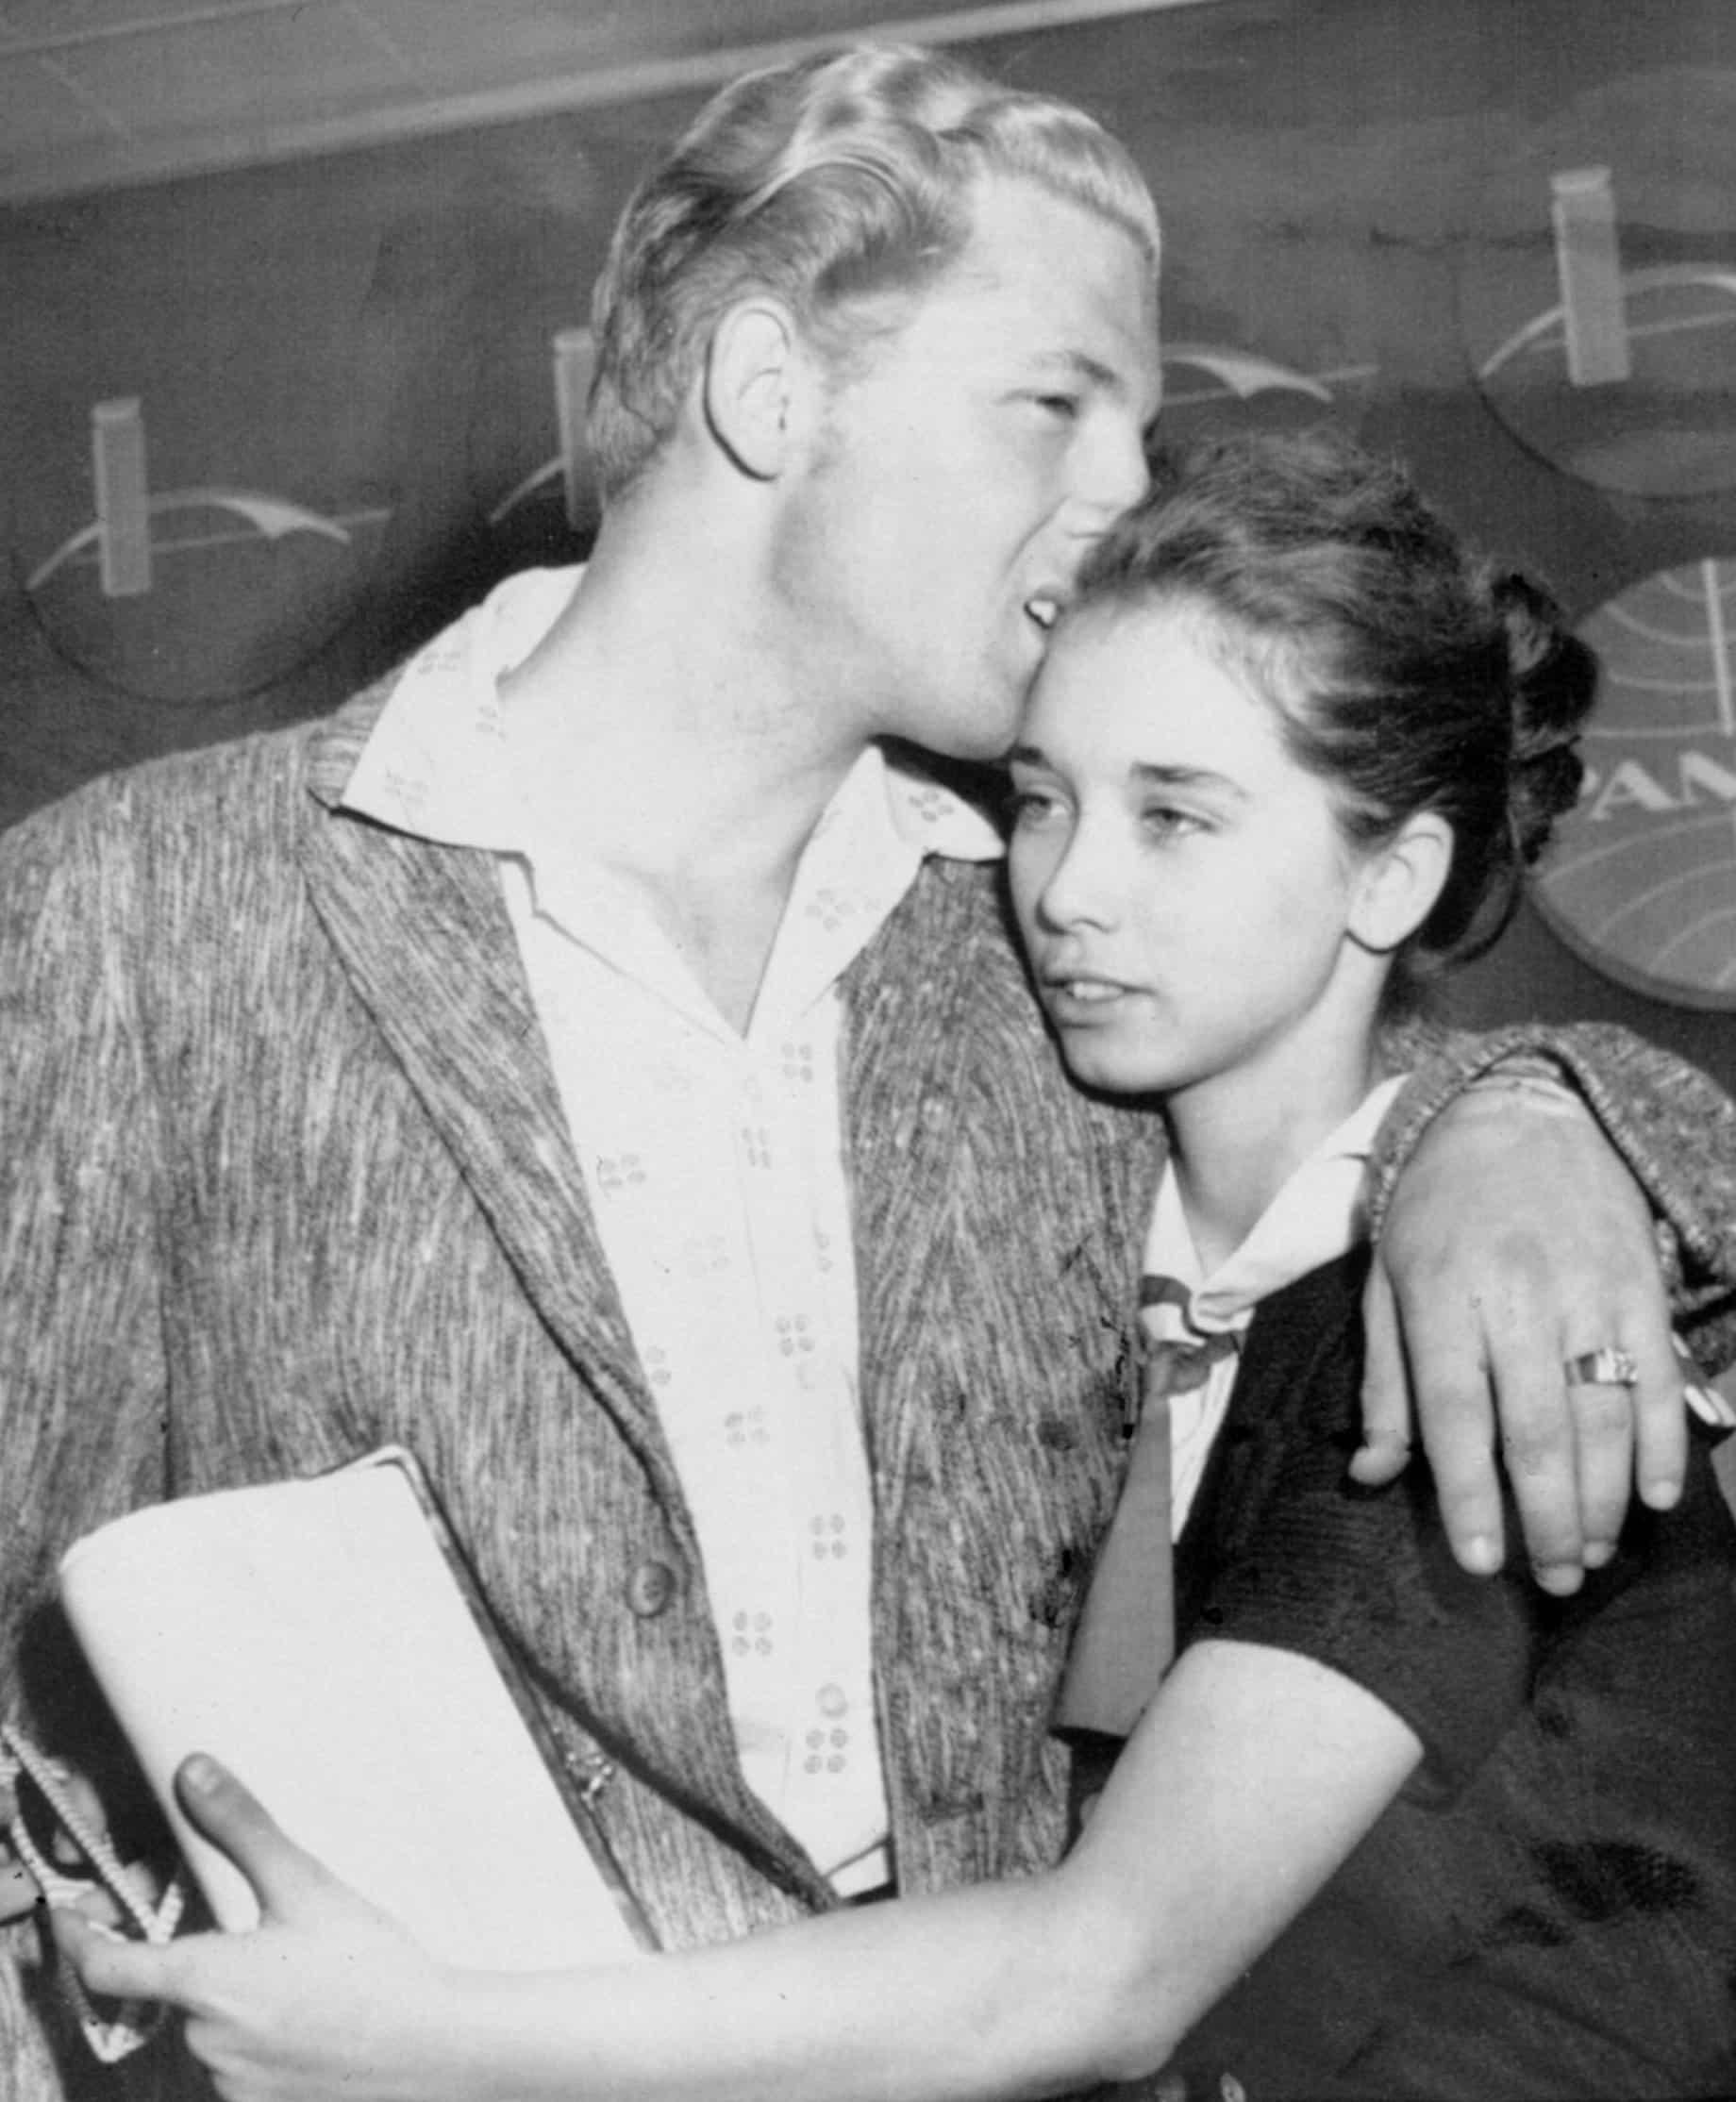 Jerry Lee Lewis kisses his bride Myra, age 13, NYC, 05-28-58